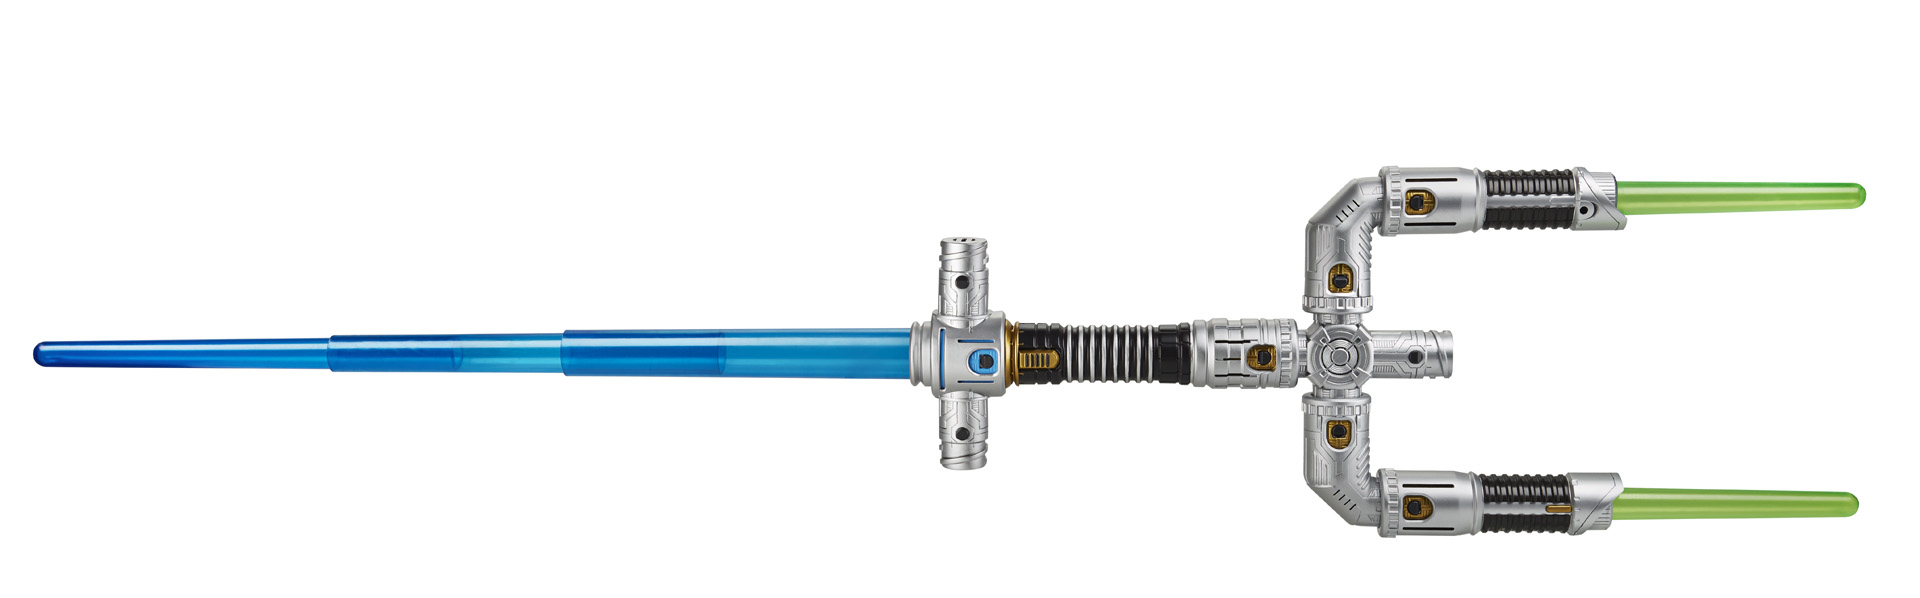 Star Wars Bladebuilders Let You Craft Your Own Impractical Lightsabre